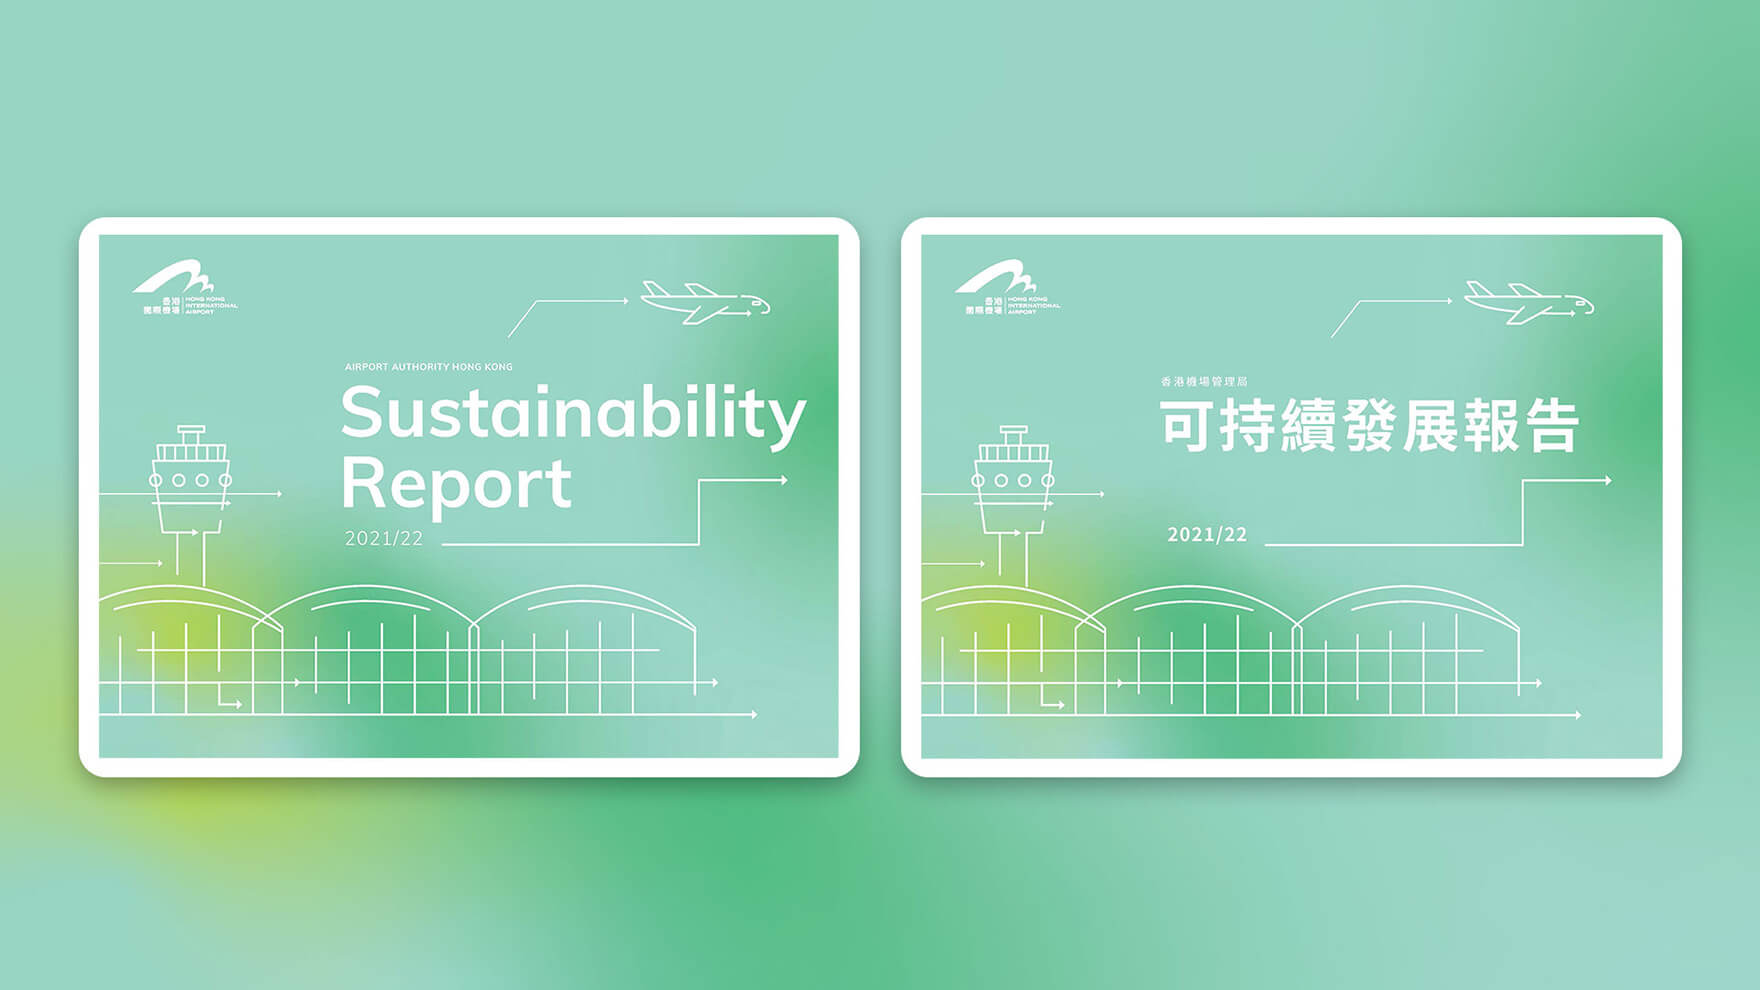 Branding Agency Hong Kong_AirportAuthorityHongKong_Sustainability Report Design_CheddarMedia_2_1760